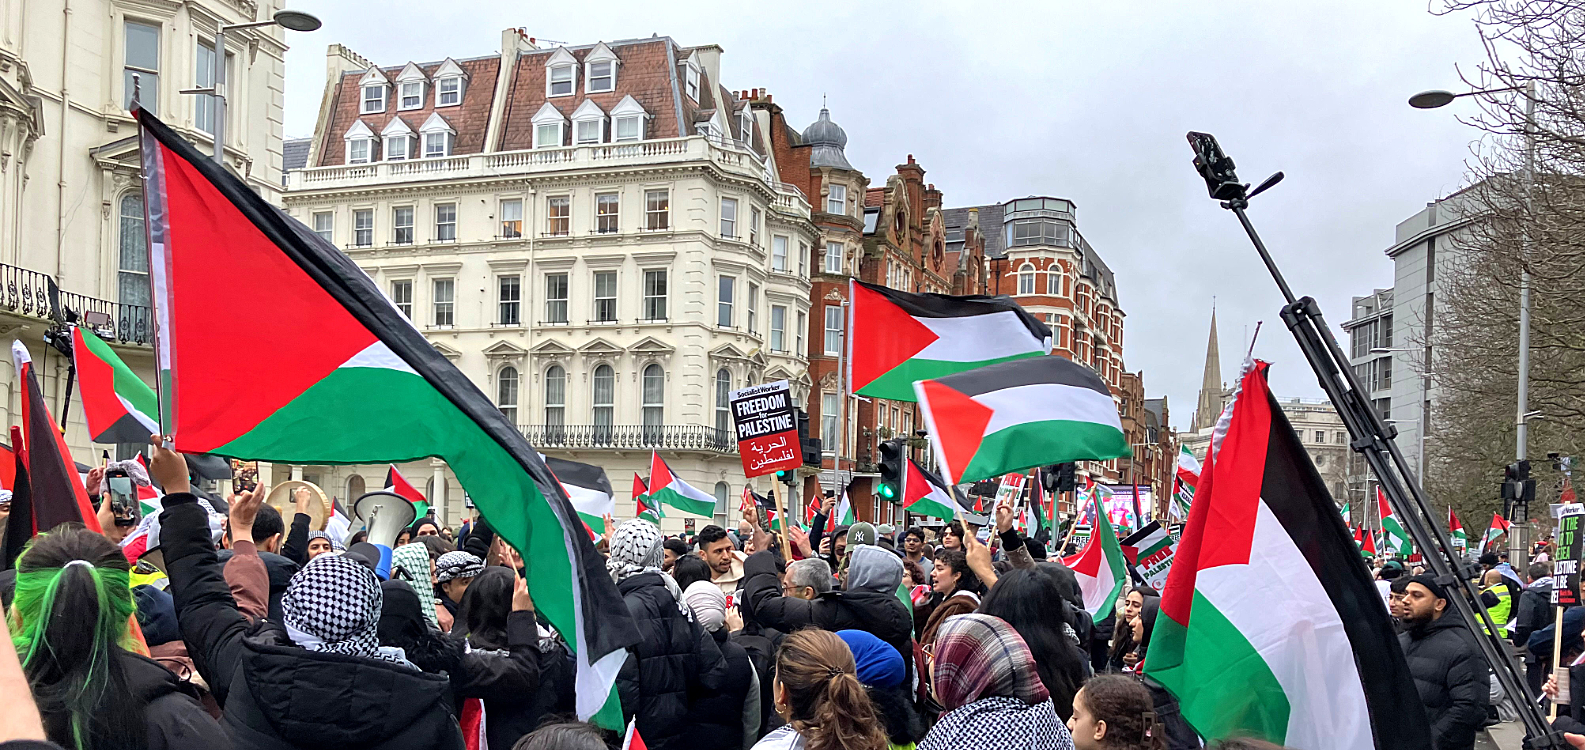 Free Palestine demonstration